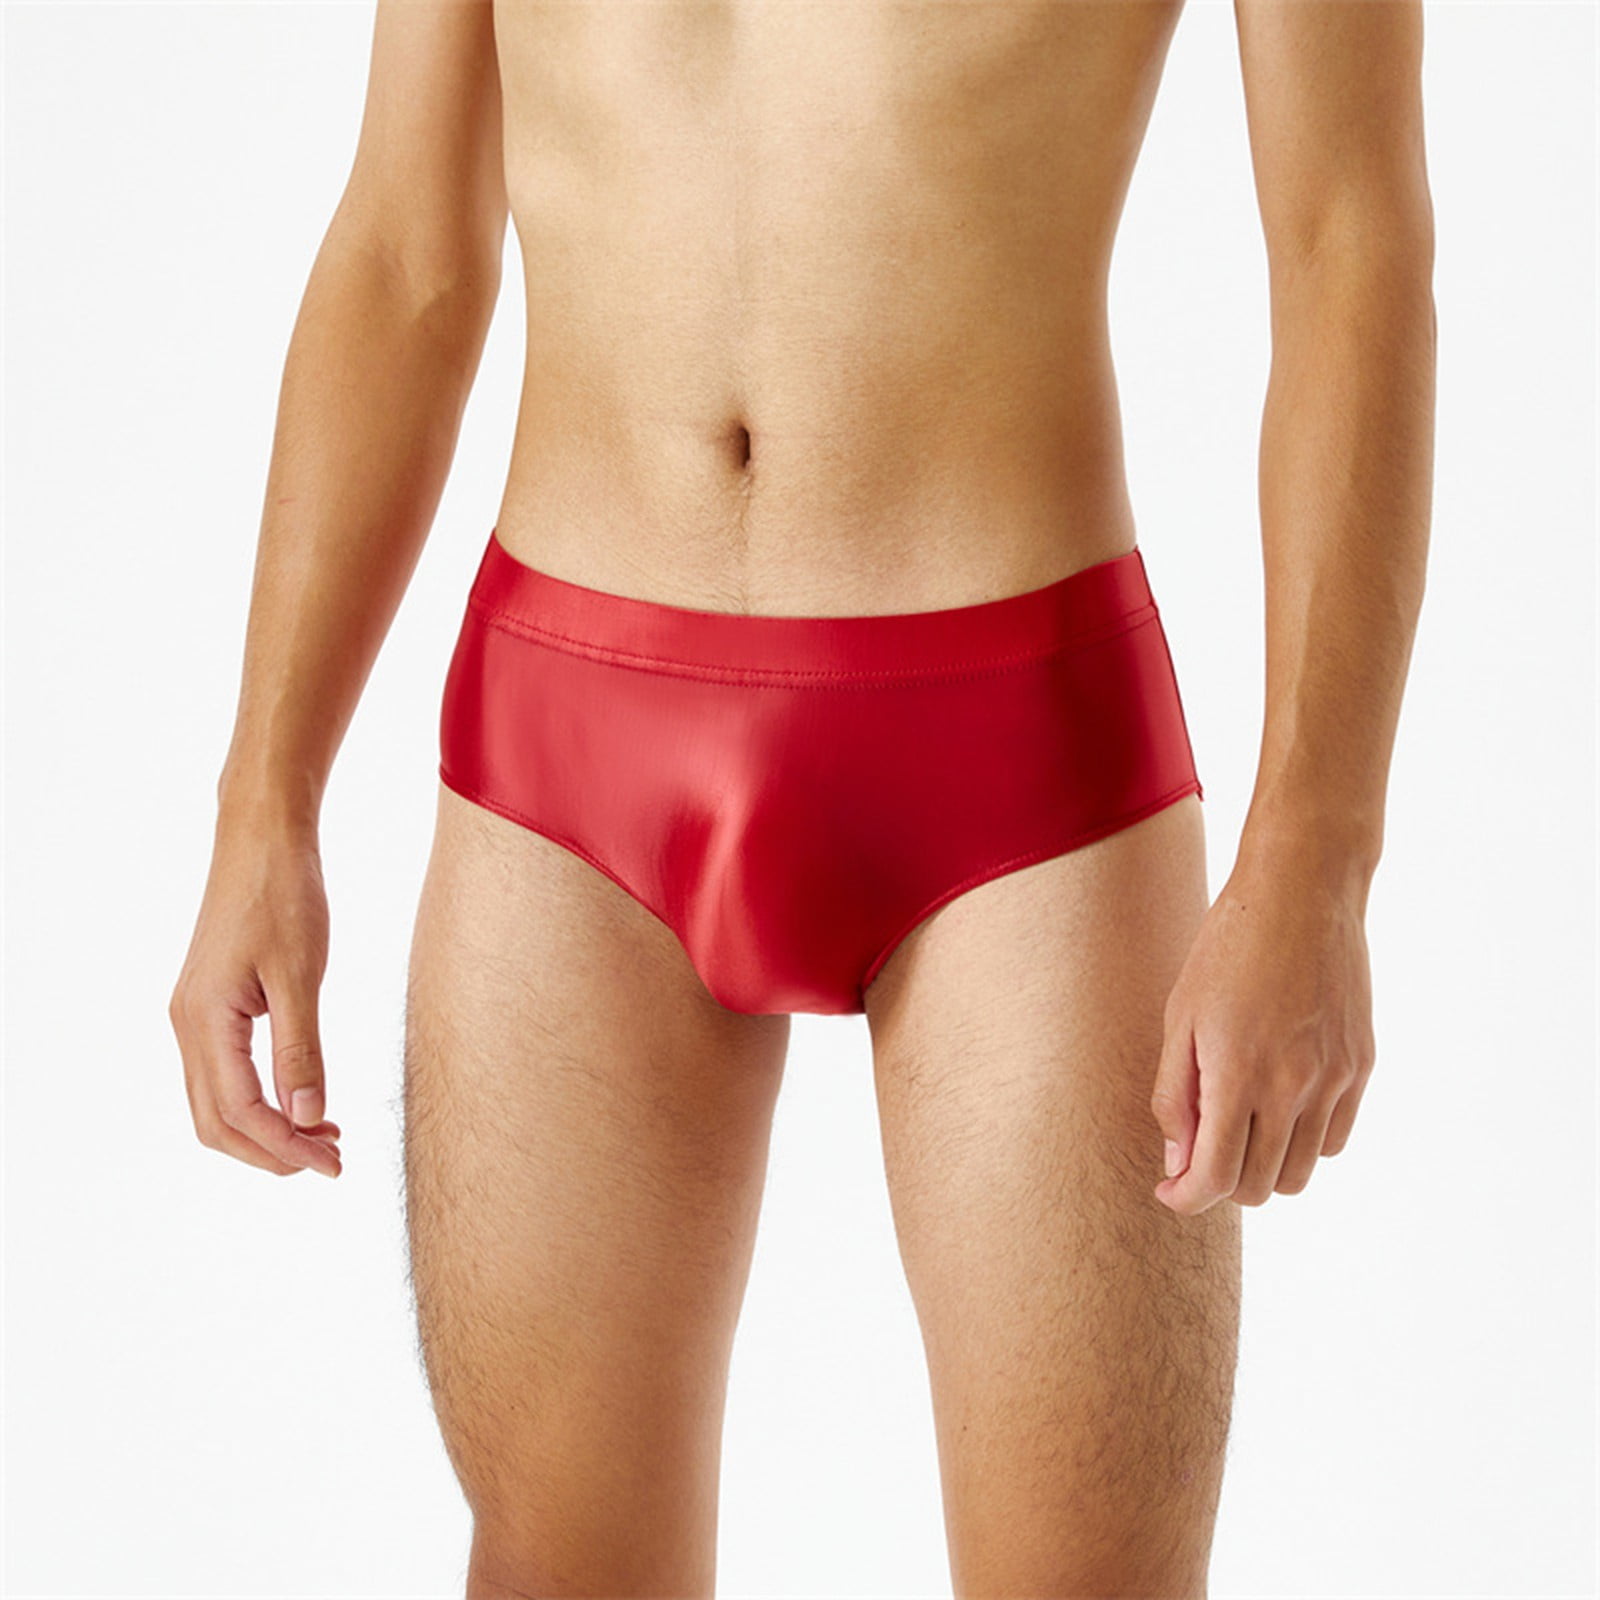 Red Mens Underwear Crotch Seamless Glossy Silky High Elastic Plus